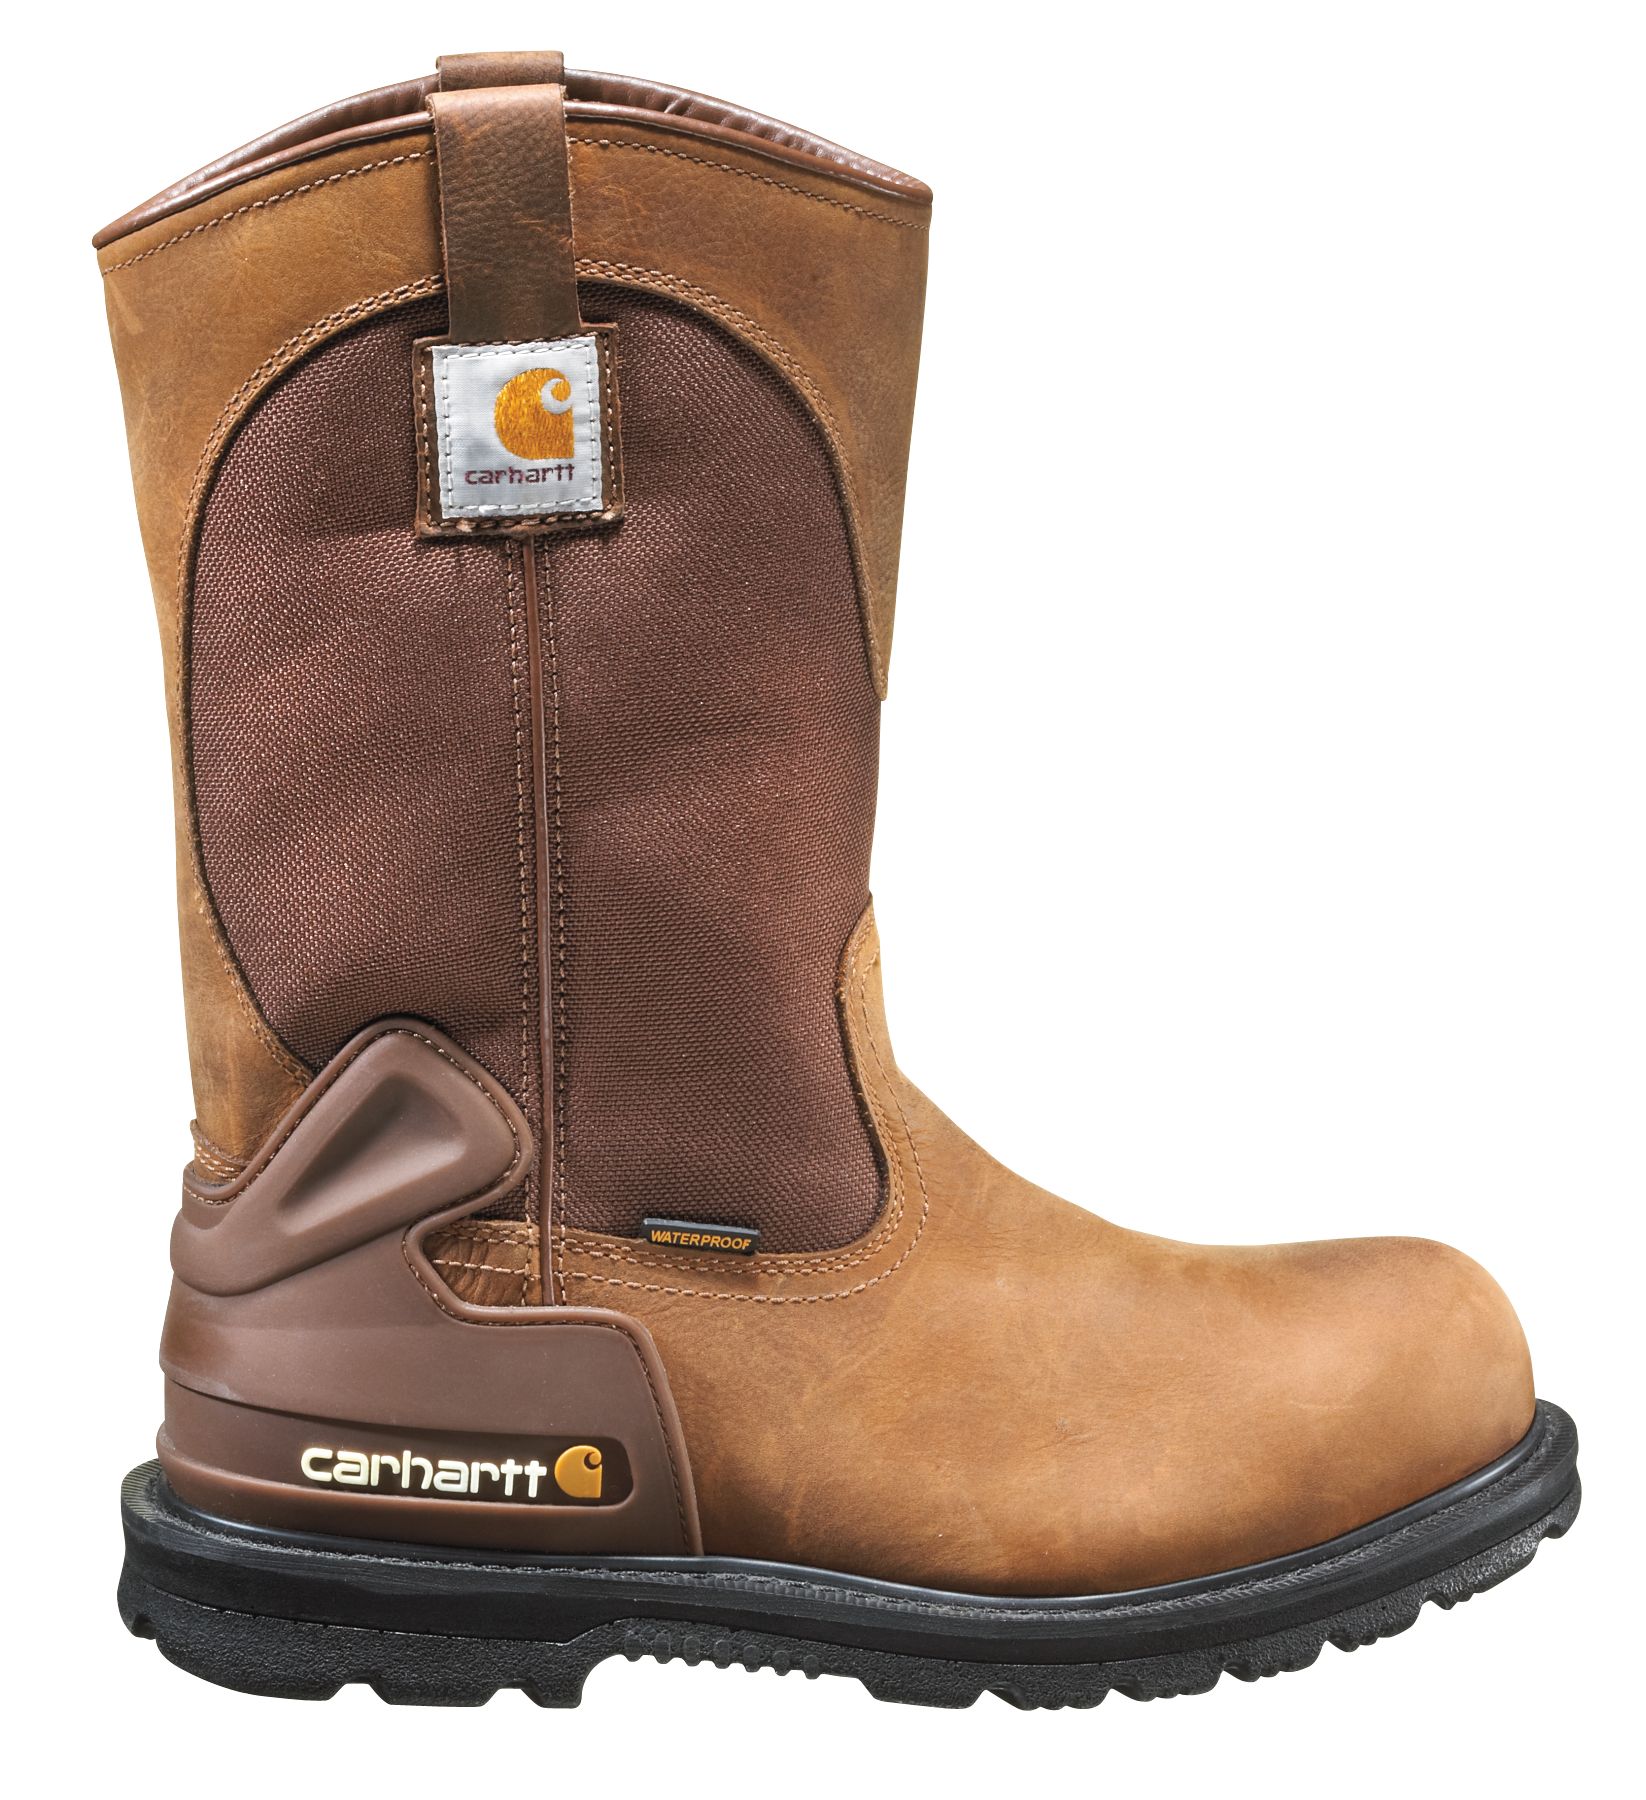 steel toe water resistant boots